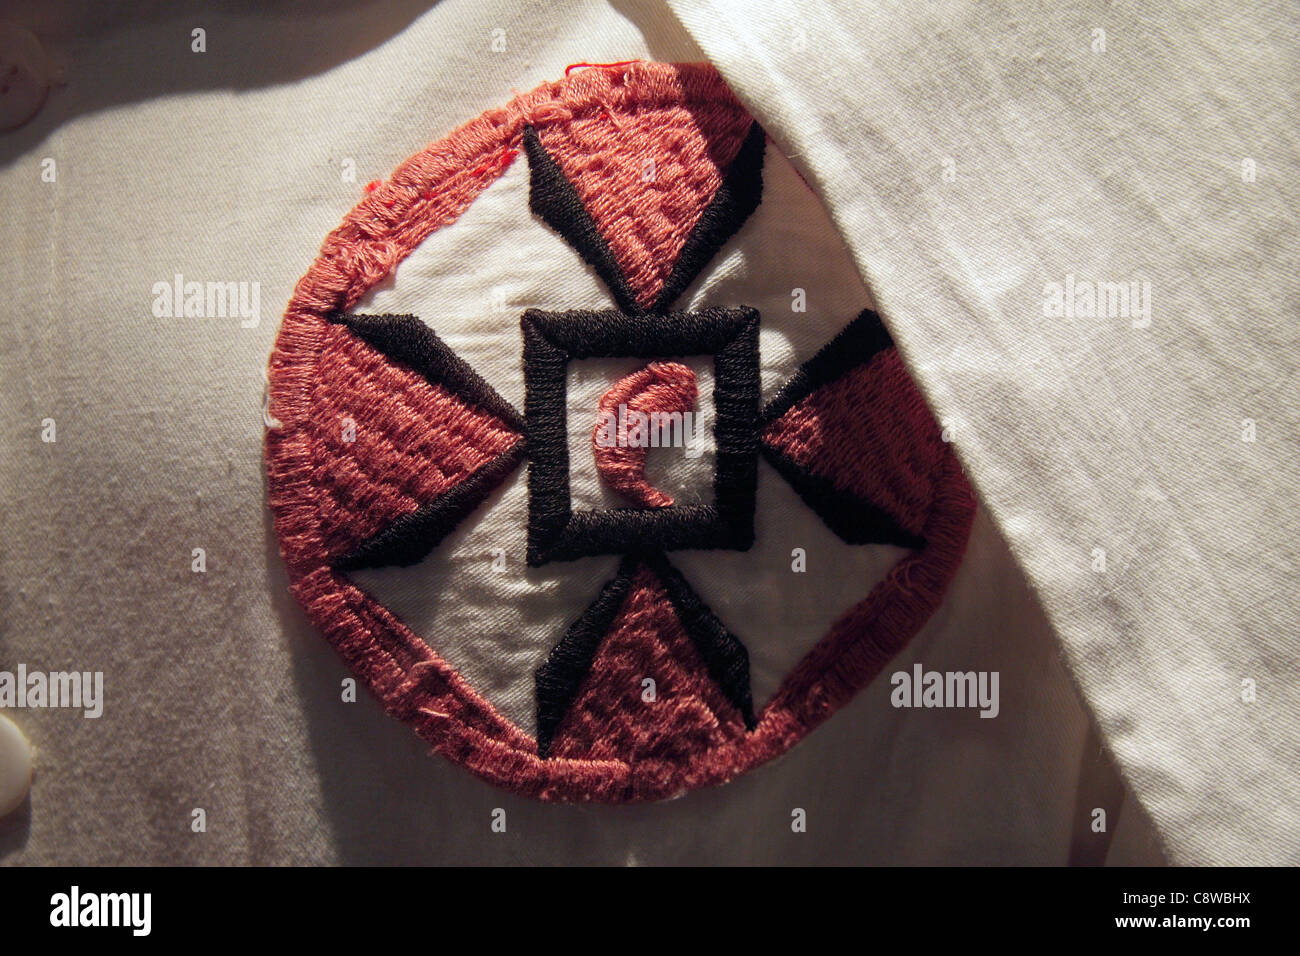 Emblem on a Ku Klux Klan outfit on display at the International Slavery Museum, Albert Dock, Liverpool, England. Stock Photo